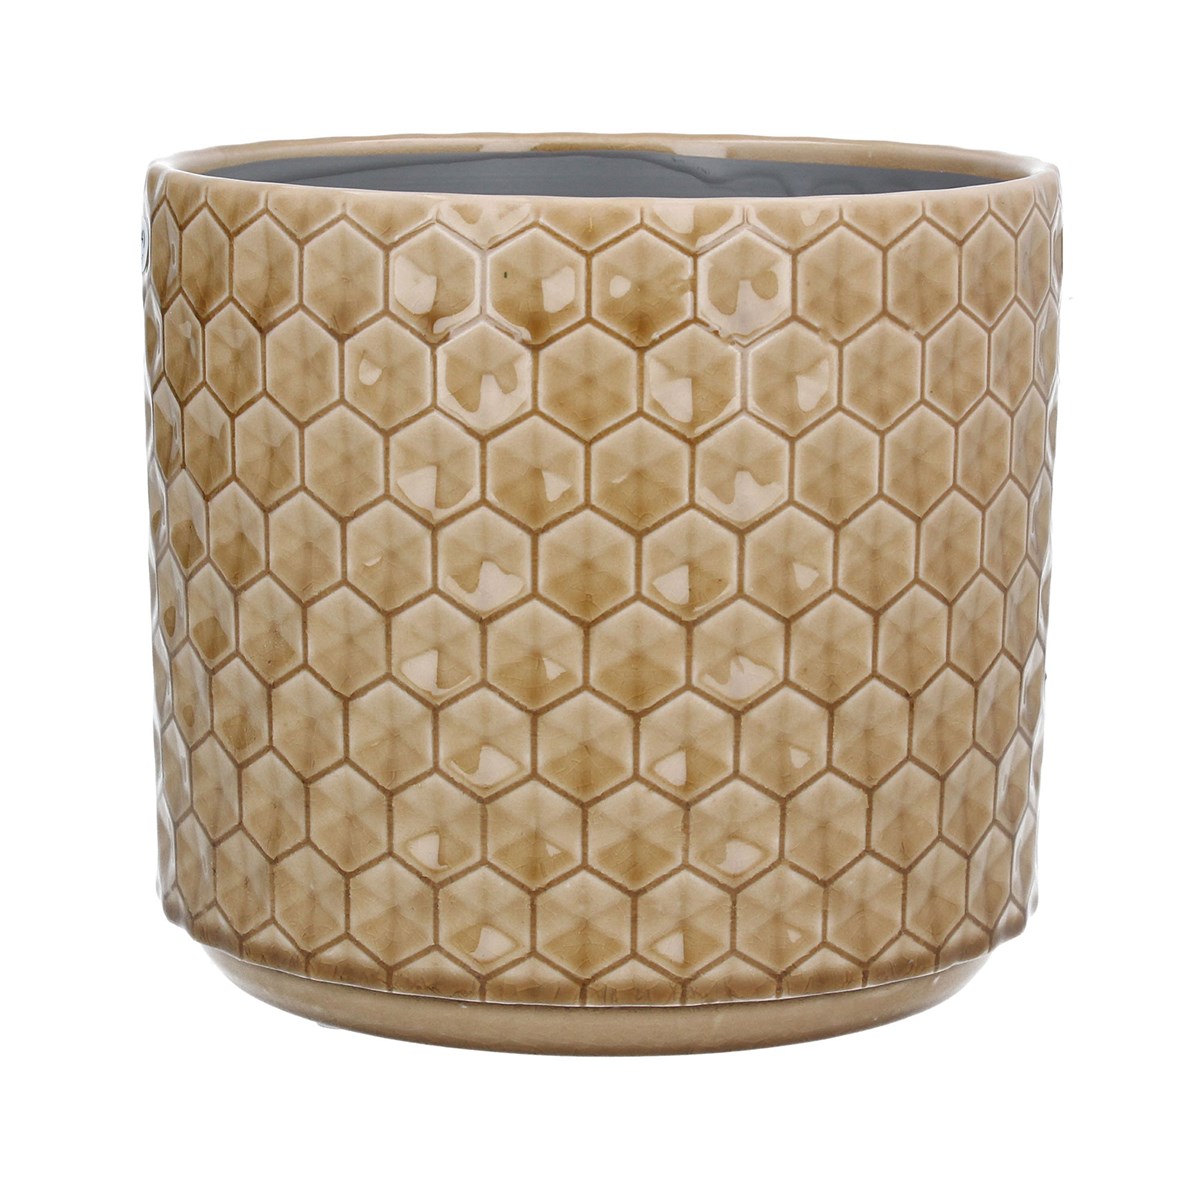 Gisela Graham Sand Honeycomb Ceramic Pot Cover, Large